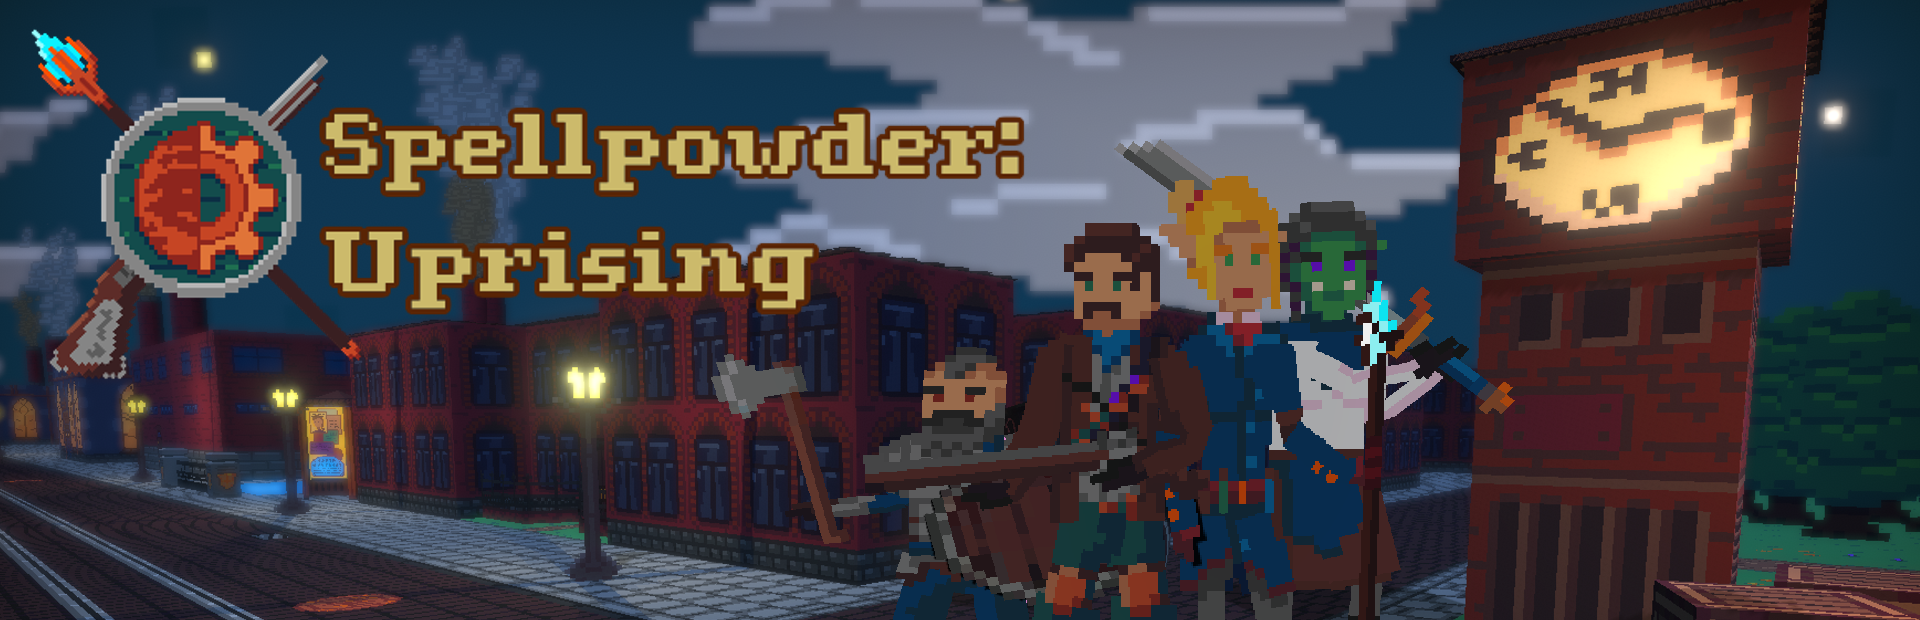 Spellpowder: Uprising demo